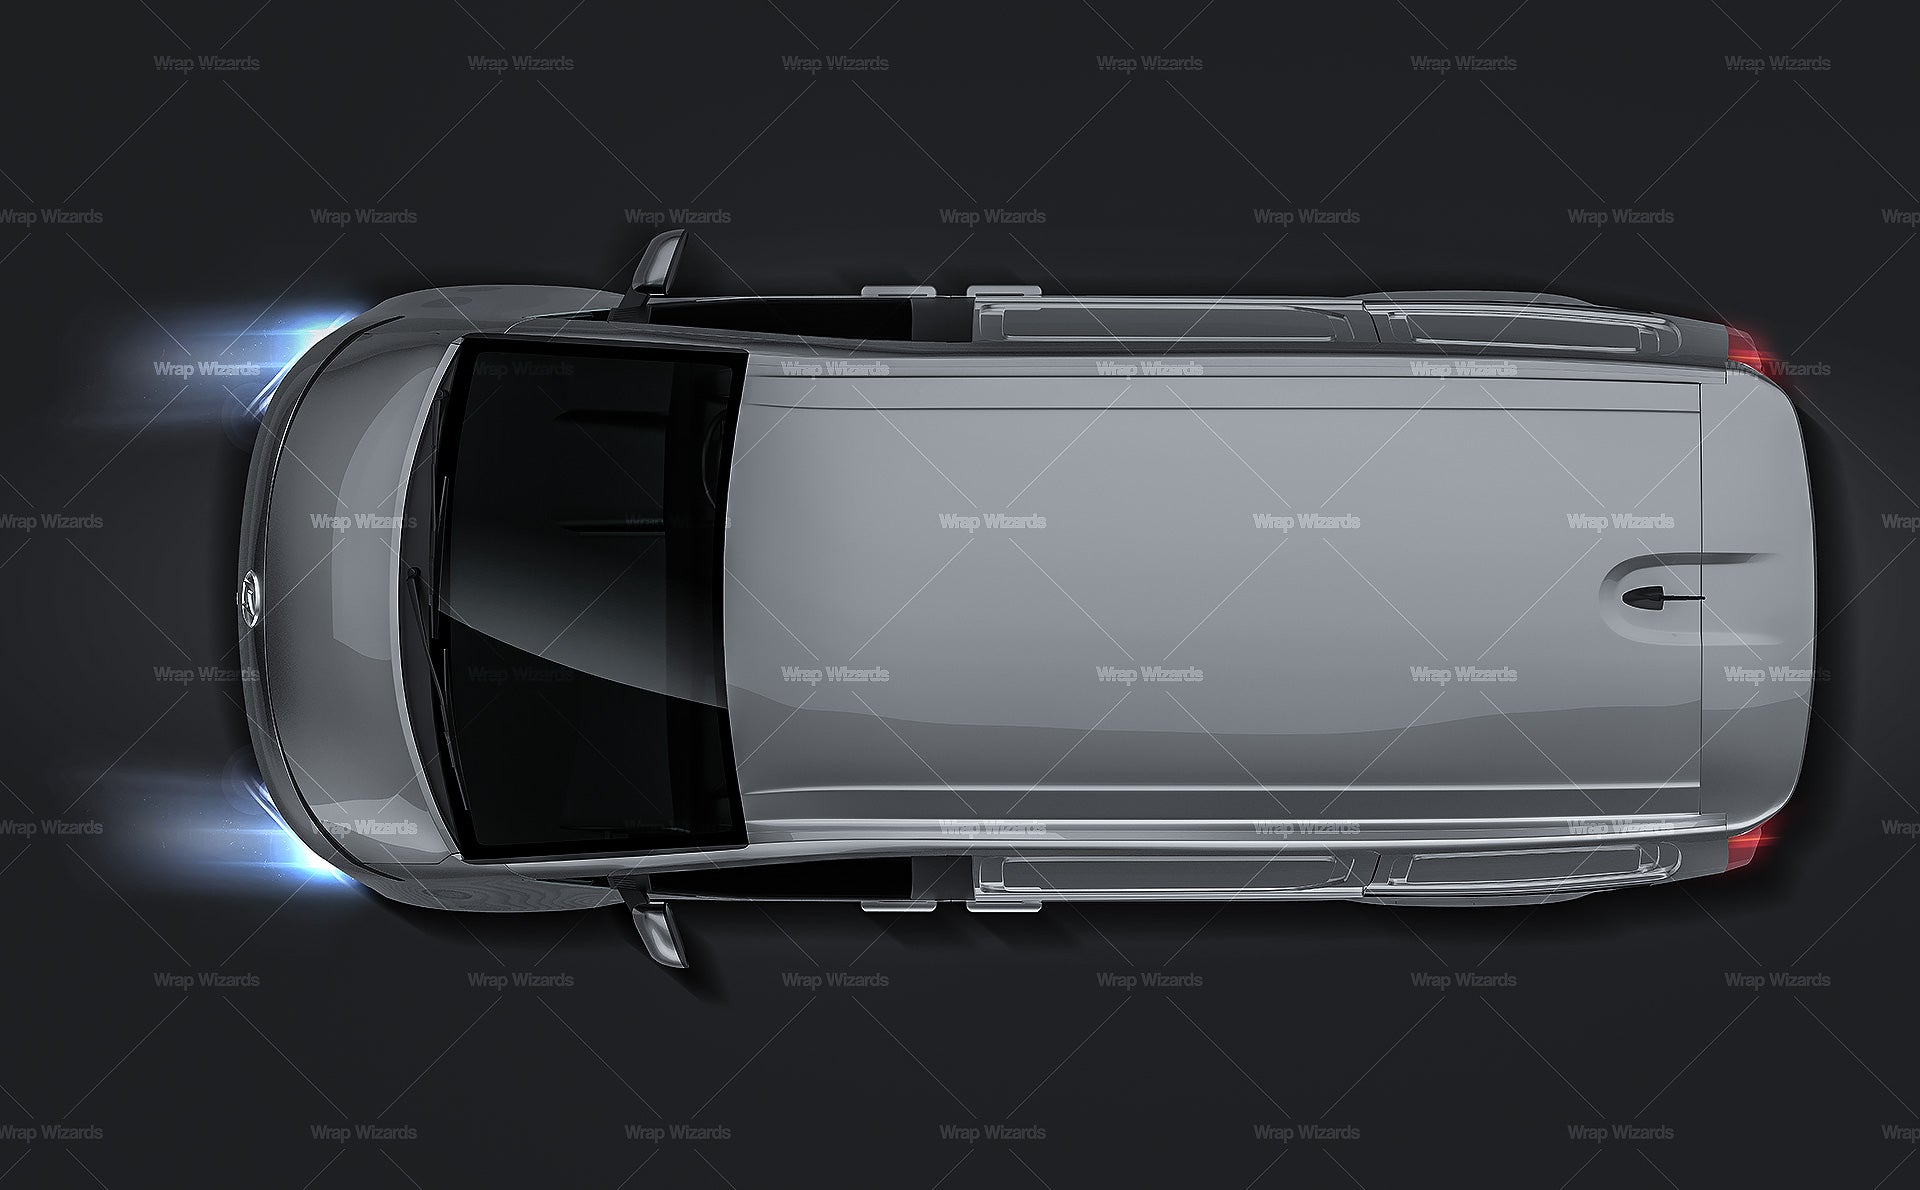 2022 Hyundai Staria Load 100% Vector template now available at  www.pxlsrs.com #hyundai #staria #hyundaistaria #van #template #vehiclewrap…